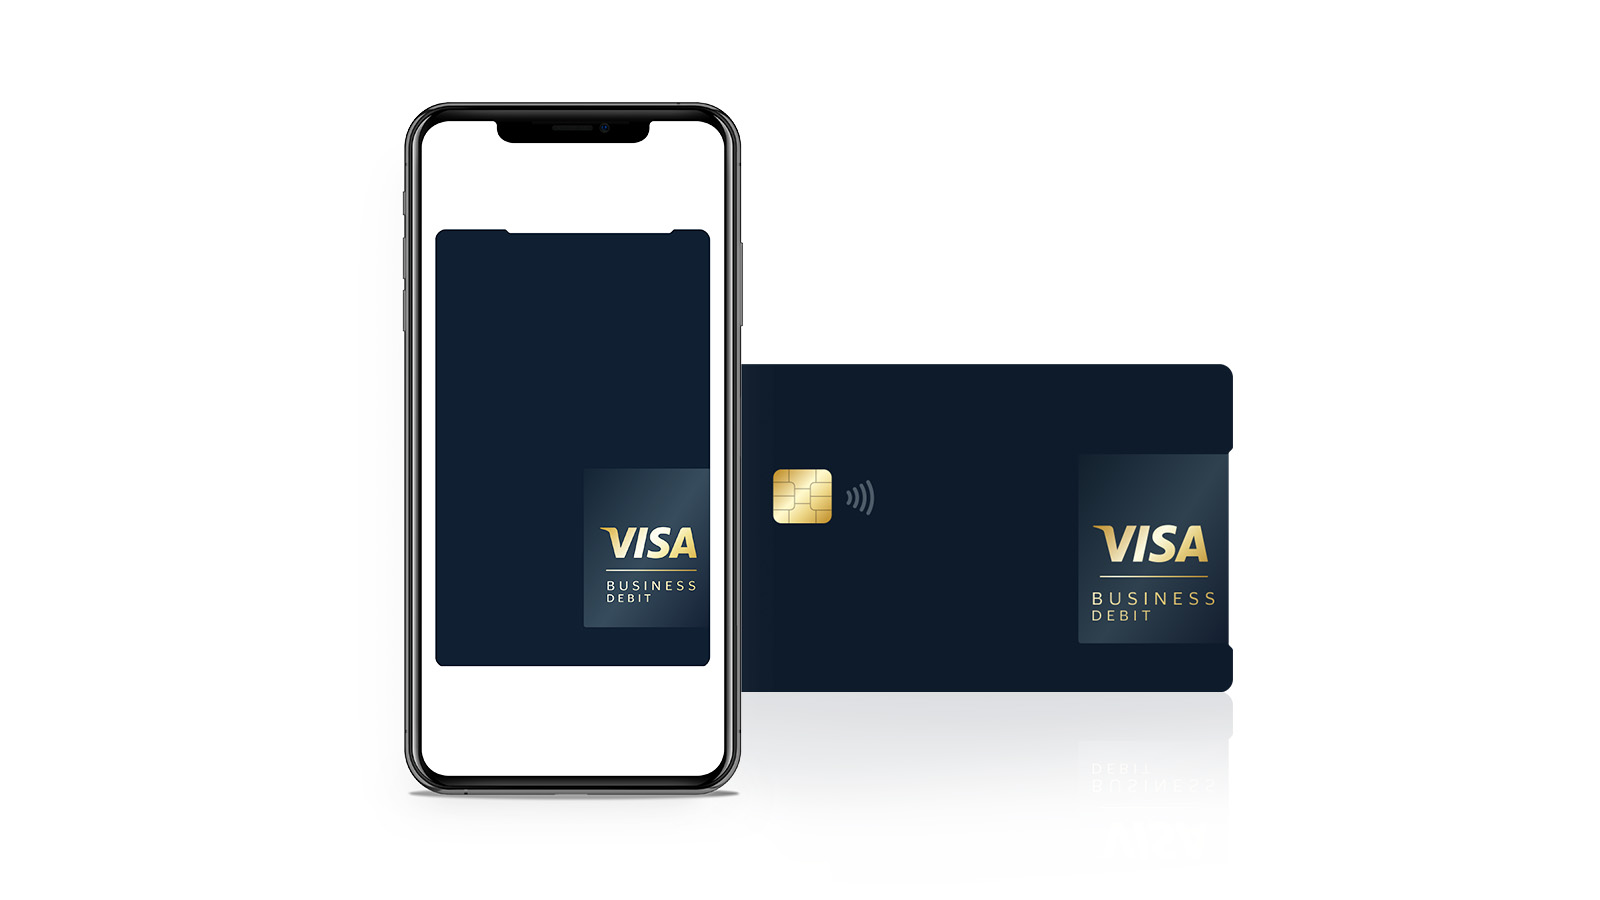 visa business debit card and mobile